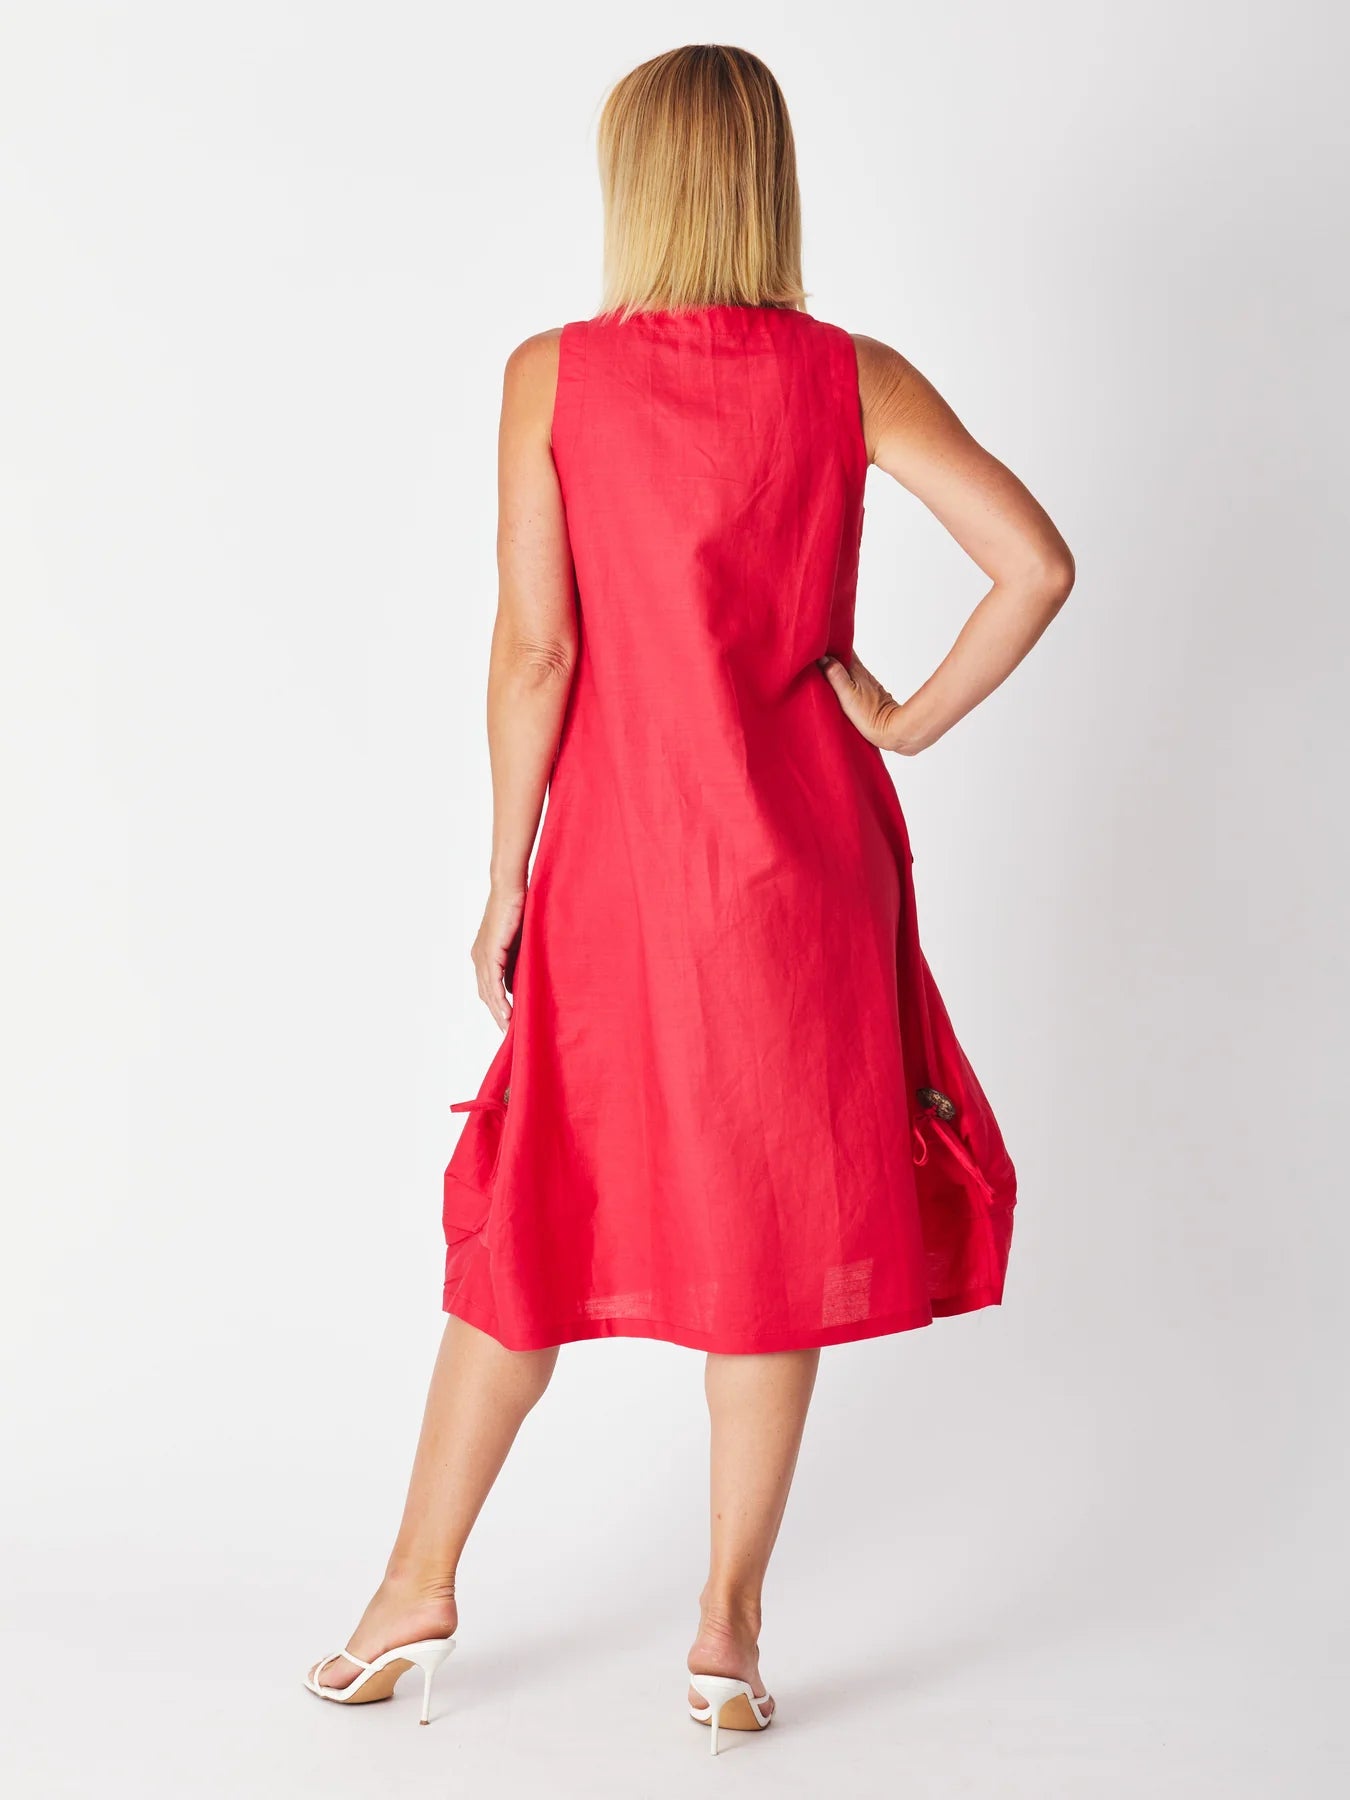 Cordelia St - Raelyn Easy Dress | Fuchsia